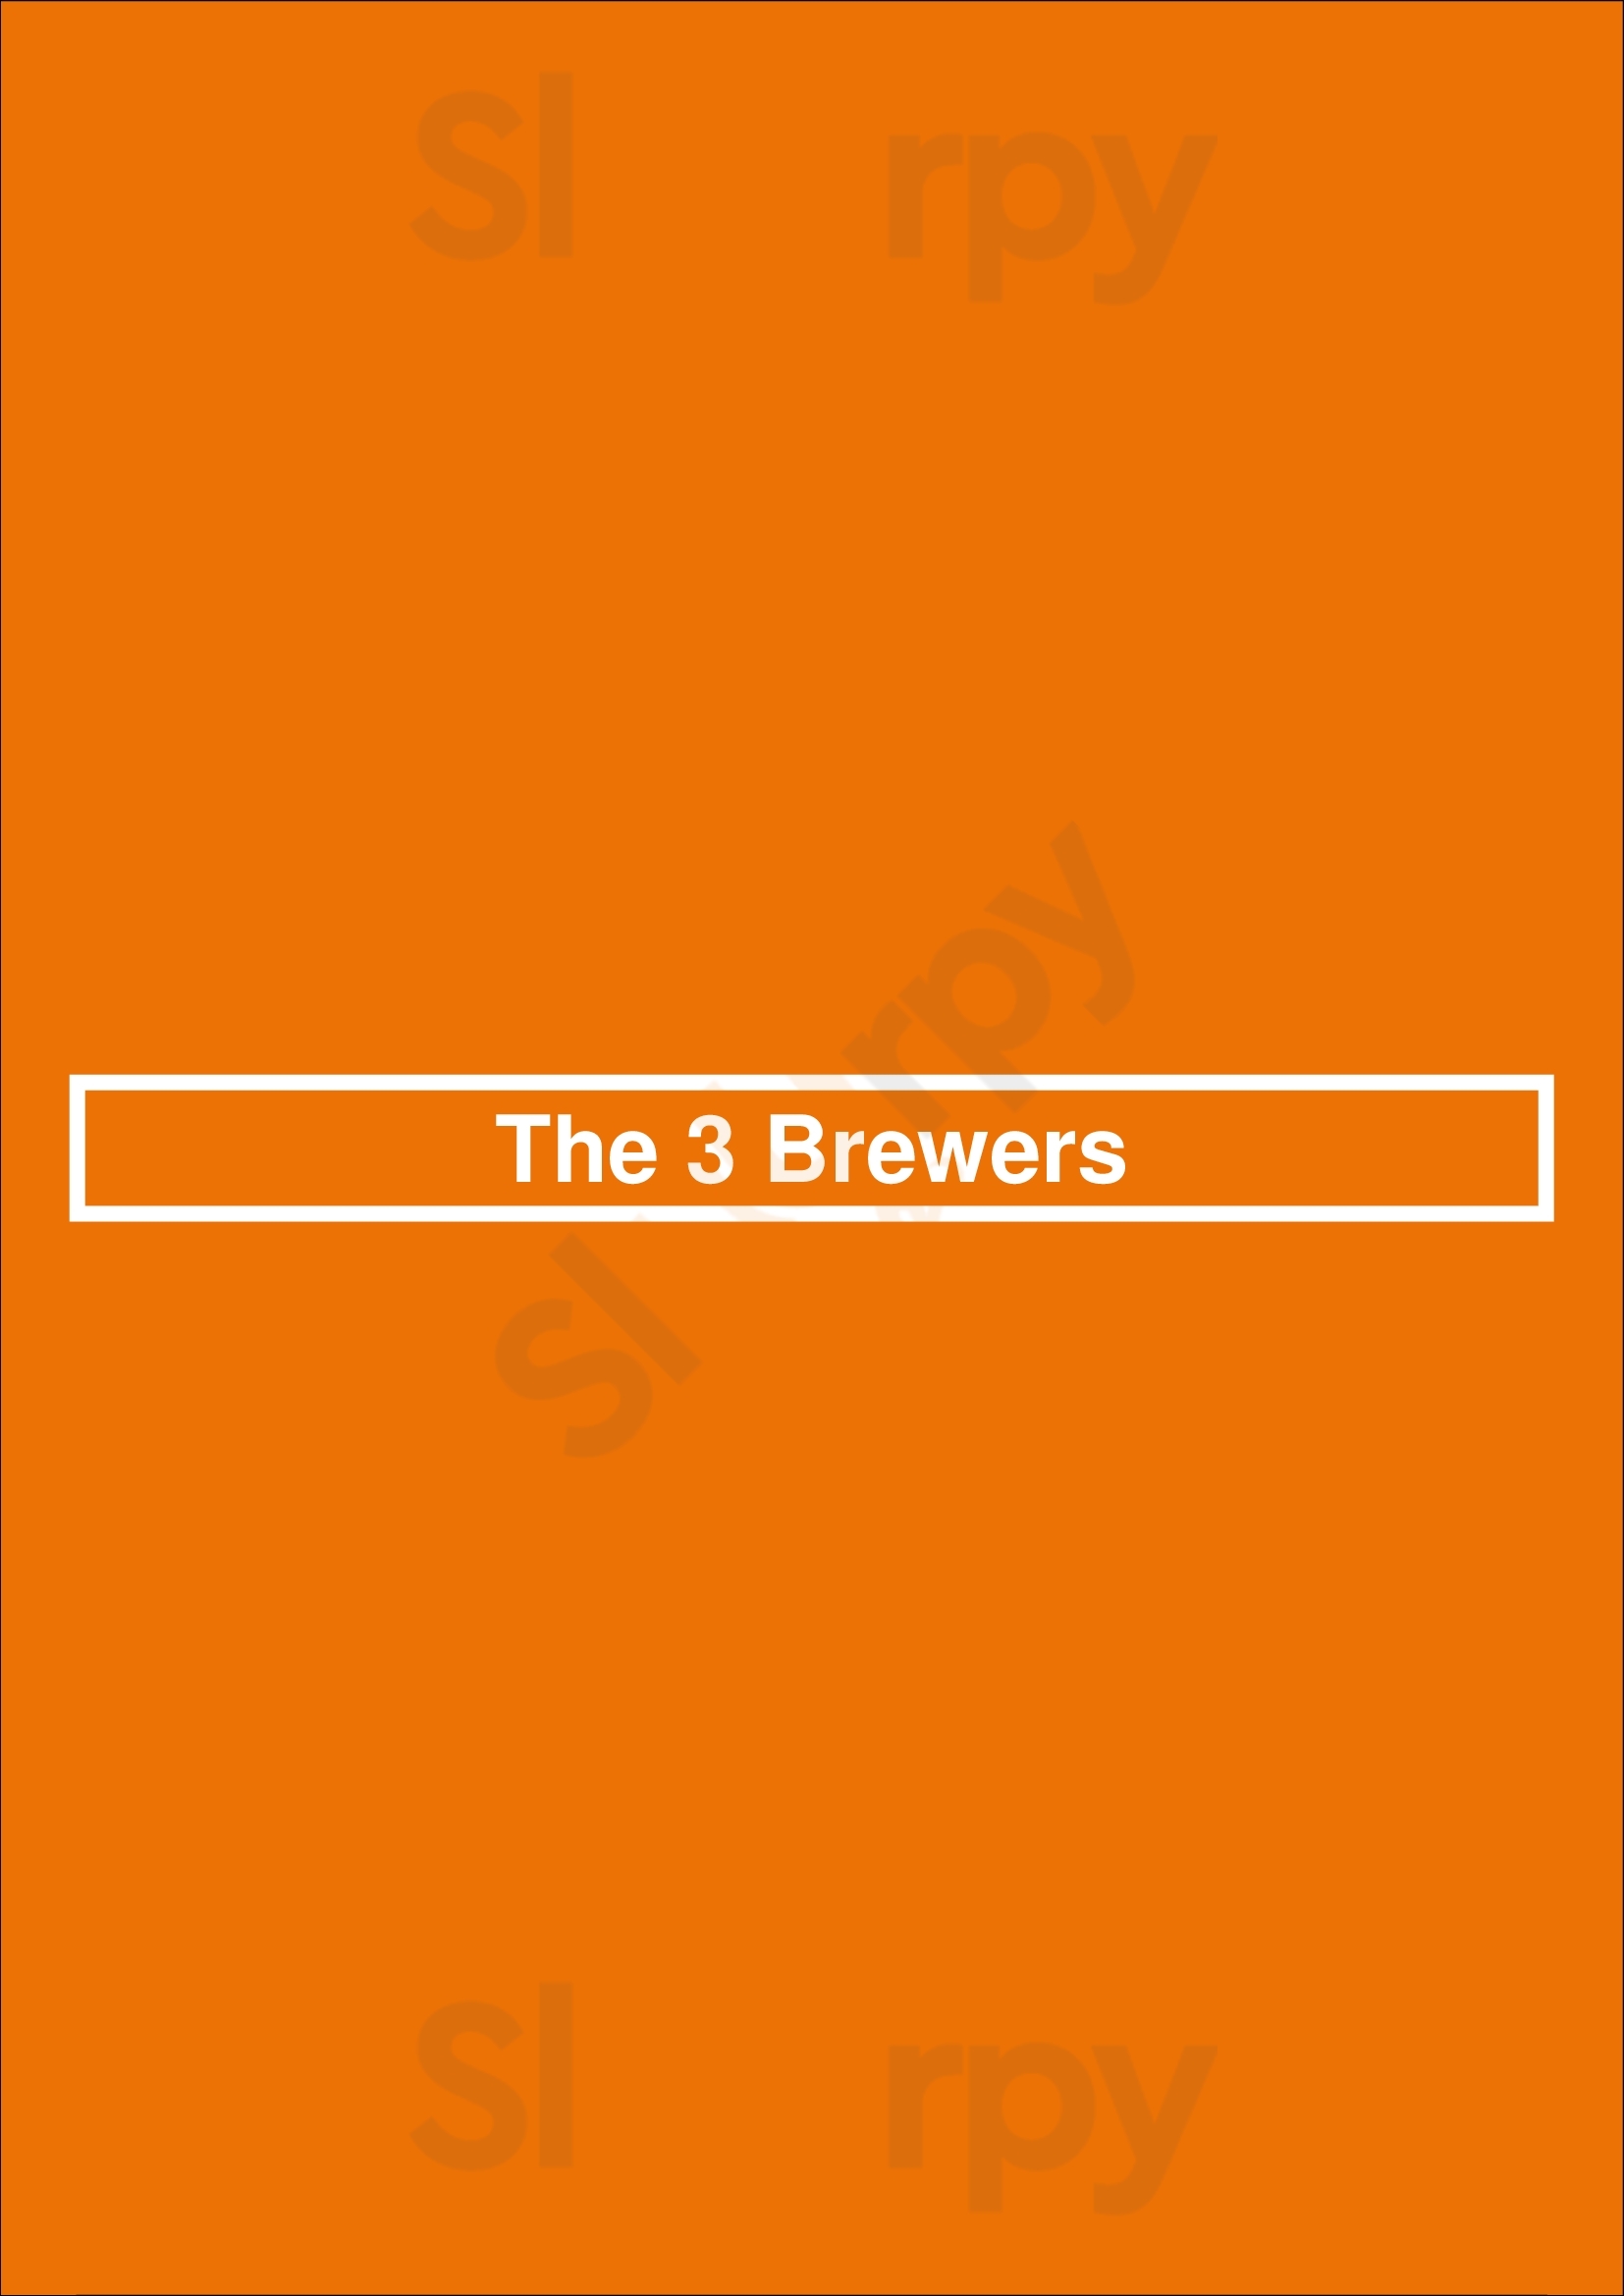 The 3 Brewers Toronto Menu - 1